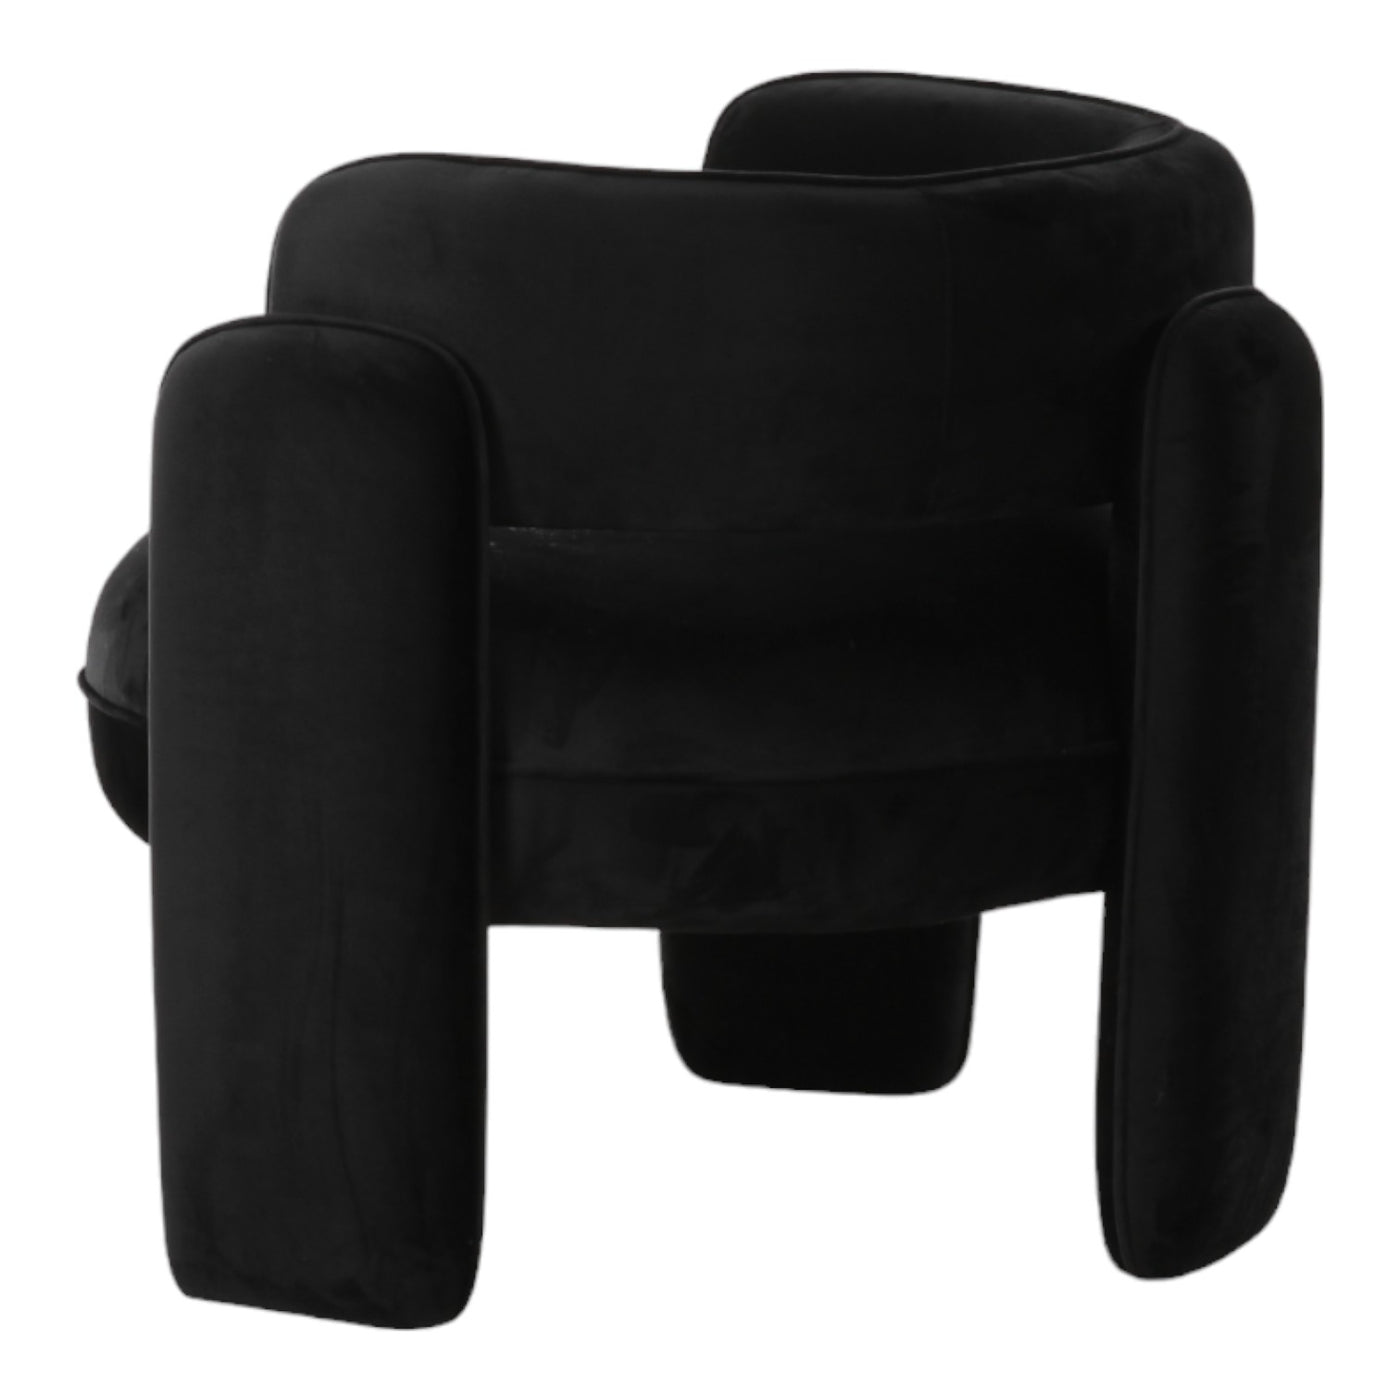 Chilli Chair Black